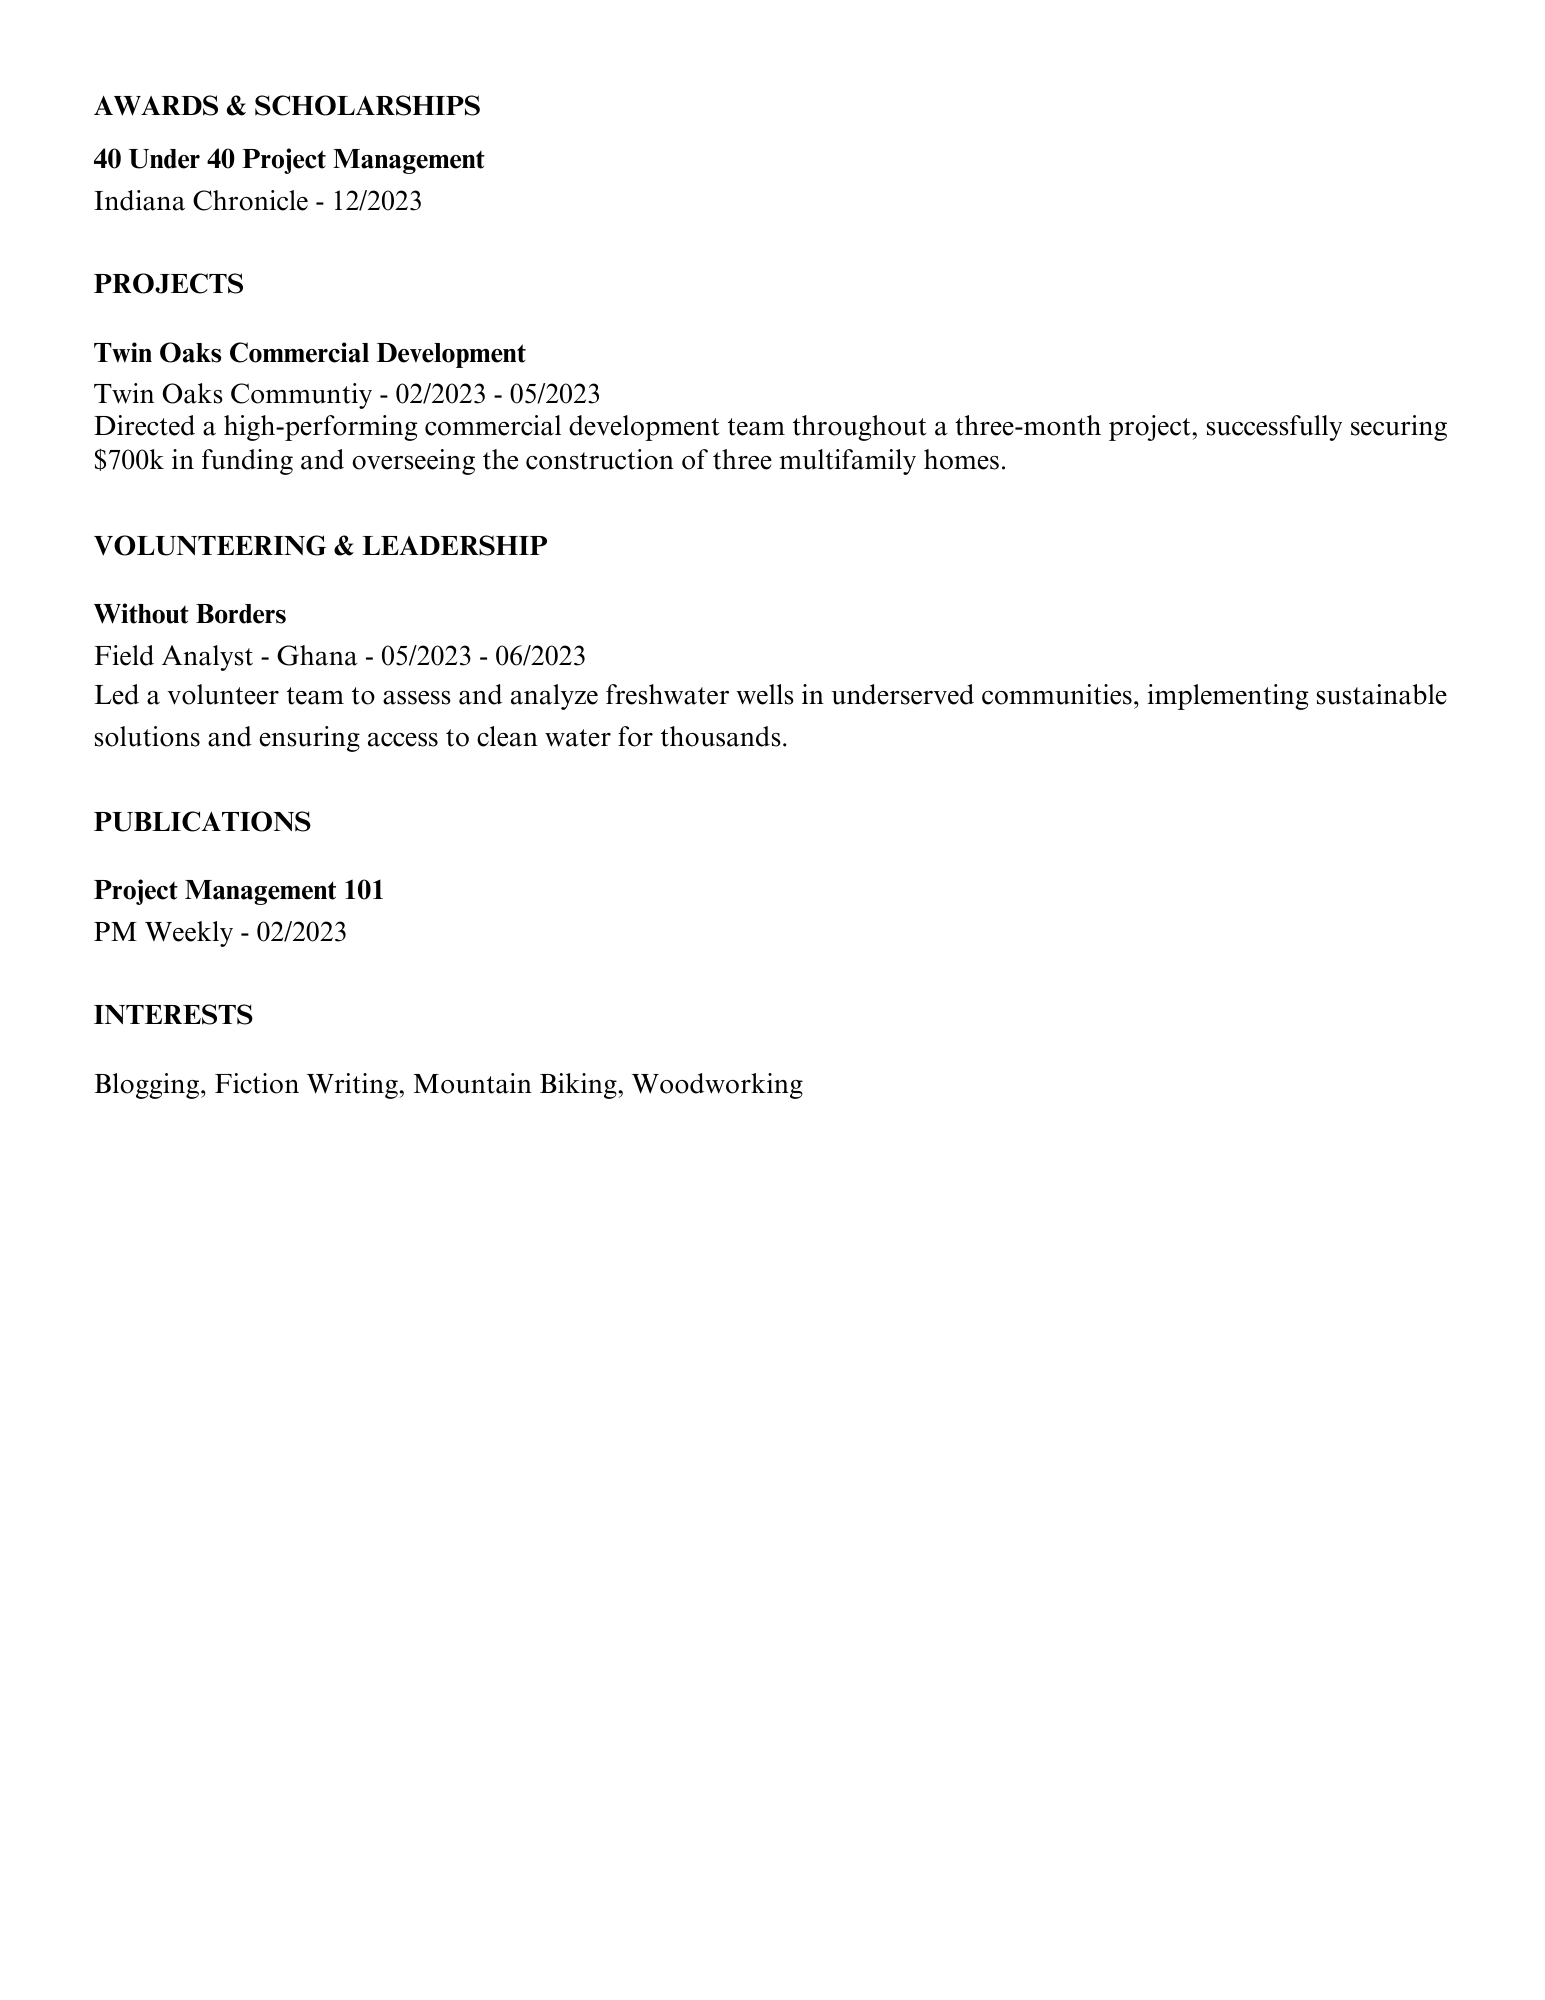 My resume   2023 12 18 04 46 43 (4).pdf (1)